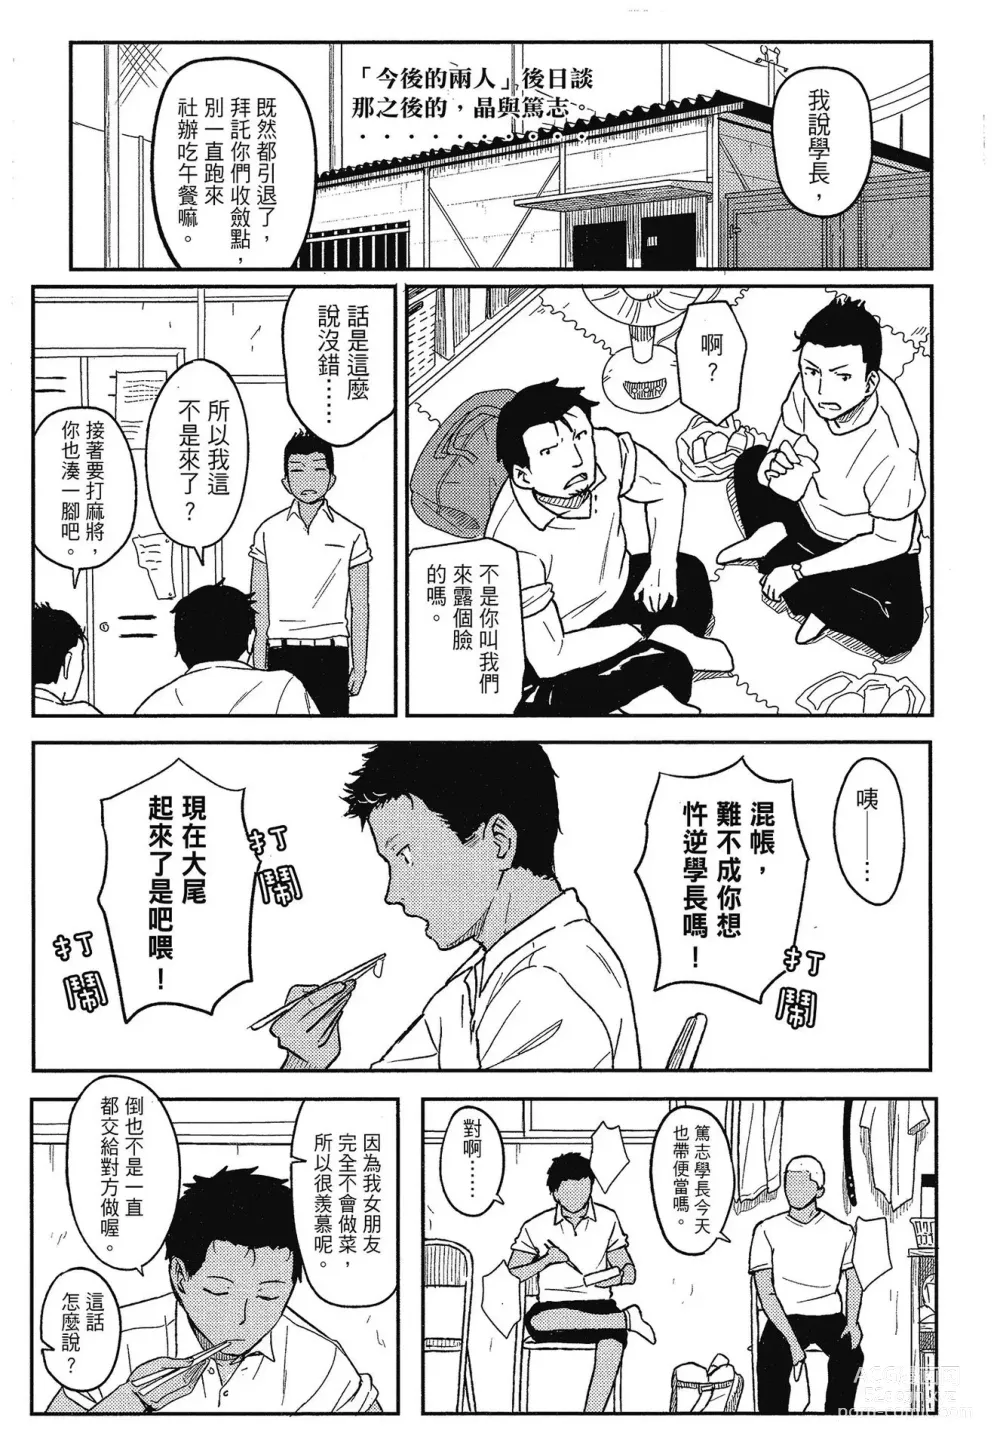 Page 209 of manga 特別的每一天 (decensored)